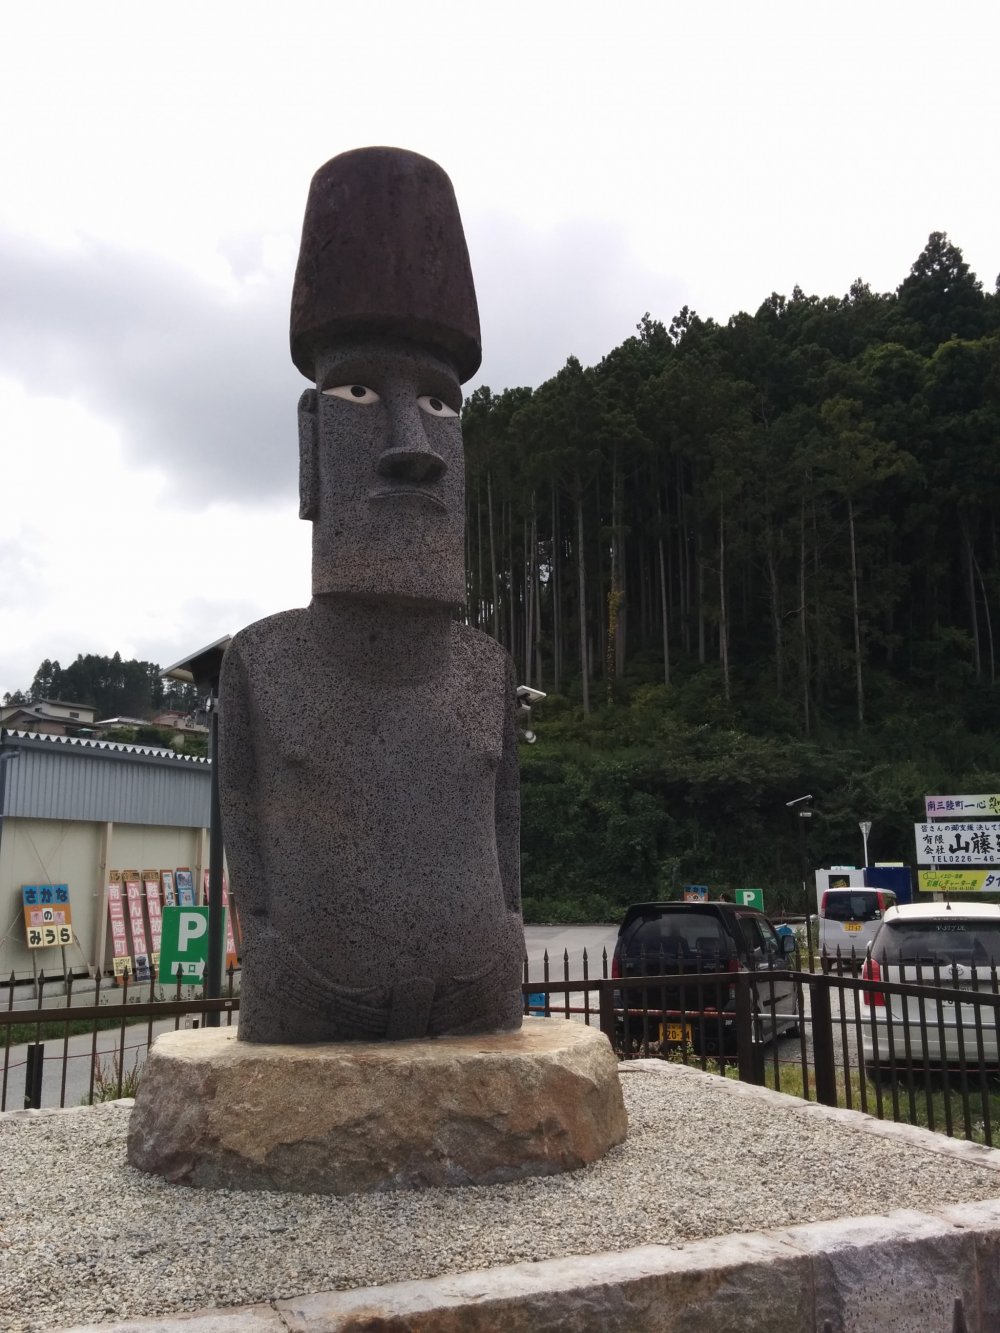 A closeup of the moai outside Sun Sun Shopping Village